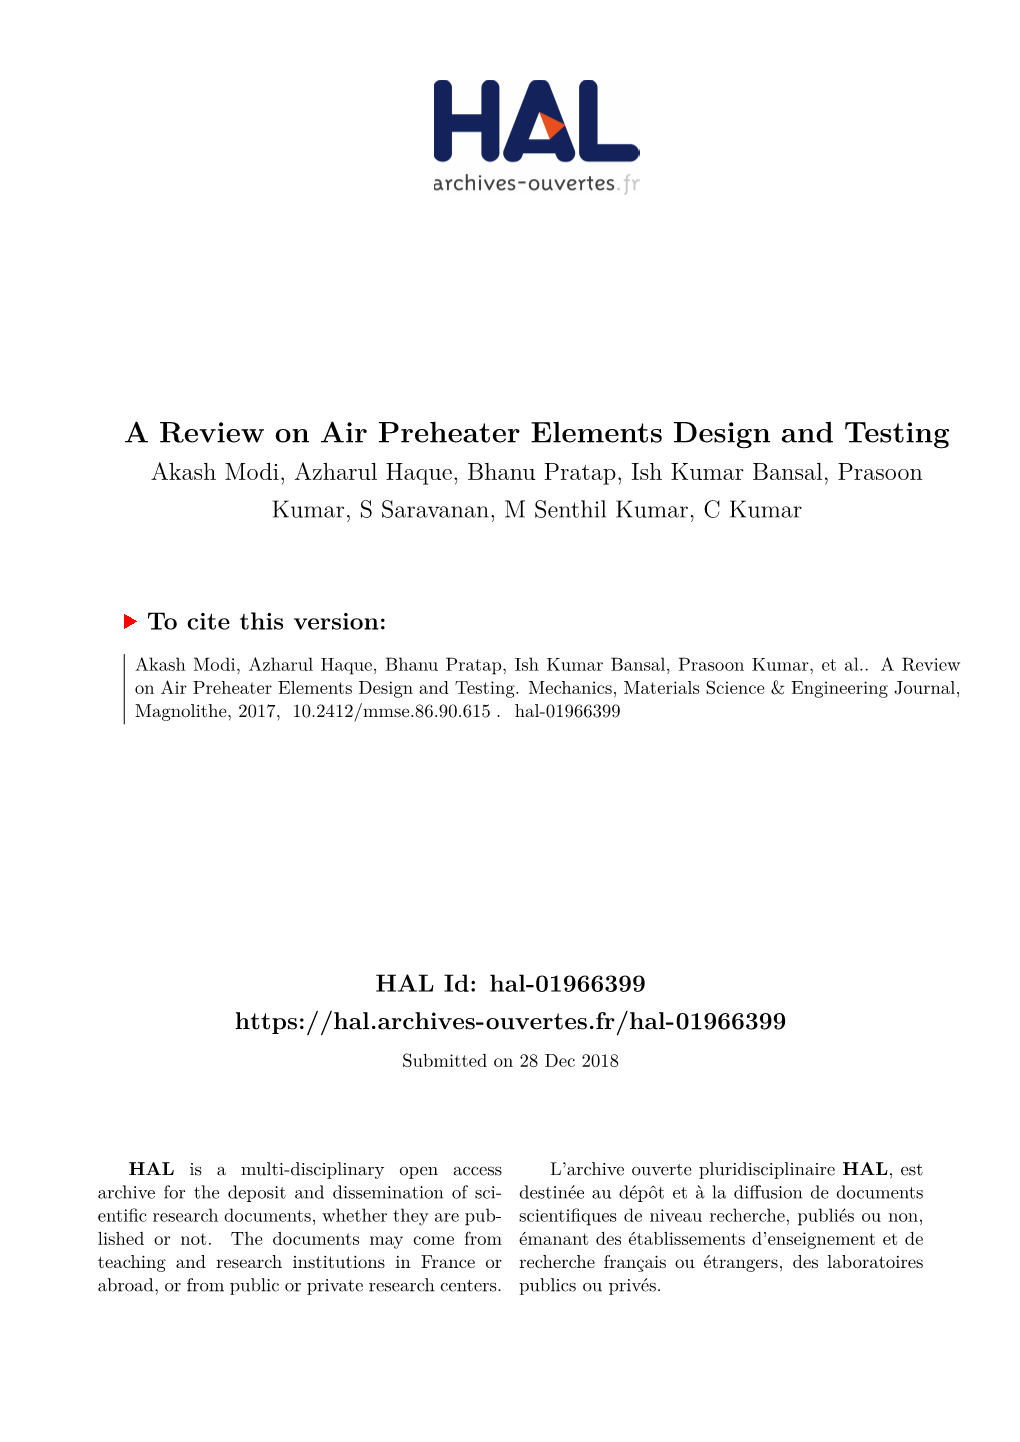 A Review on Air Preheater Elements Design and Testing Akash Modi, Azharul Haque, Bhanu Pratap, Ish Kumar Bansal, Prasoon Kumar, S Saravanan, M Senthil Kumar, C Kumar